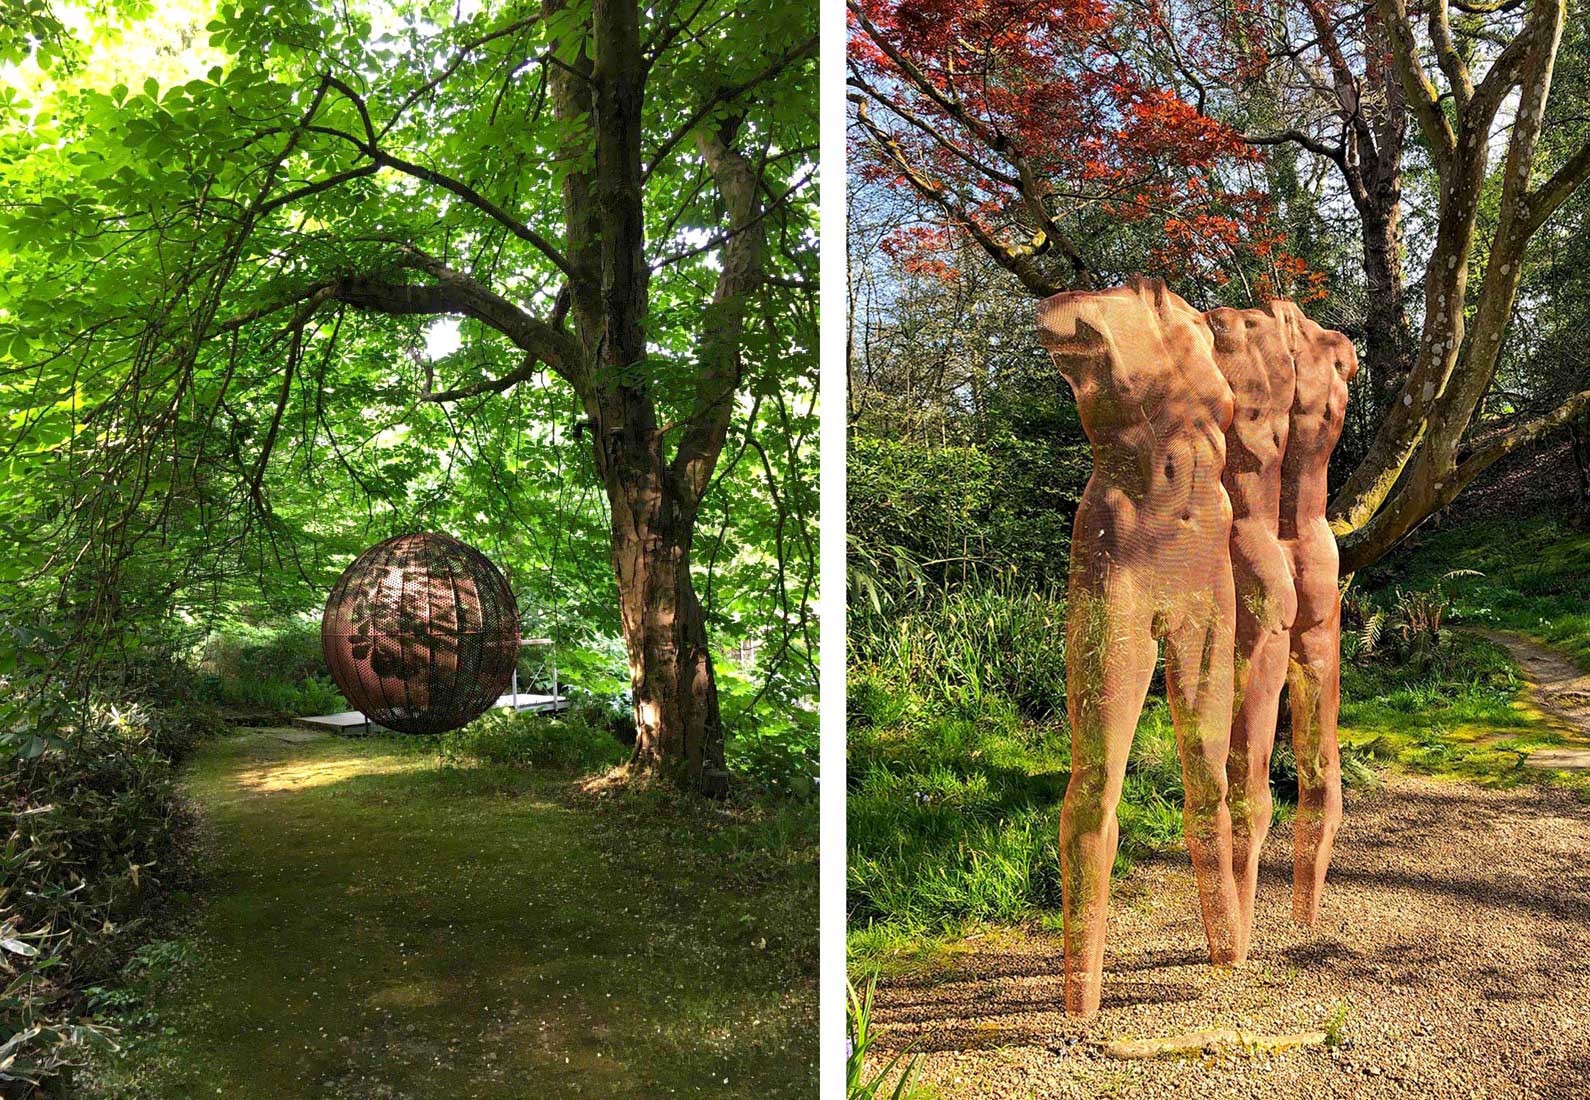 Cottage Garden - Hannah Peschar Sculpture Garden - Anthony Paul Landscape Design